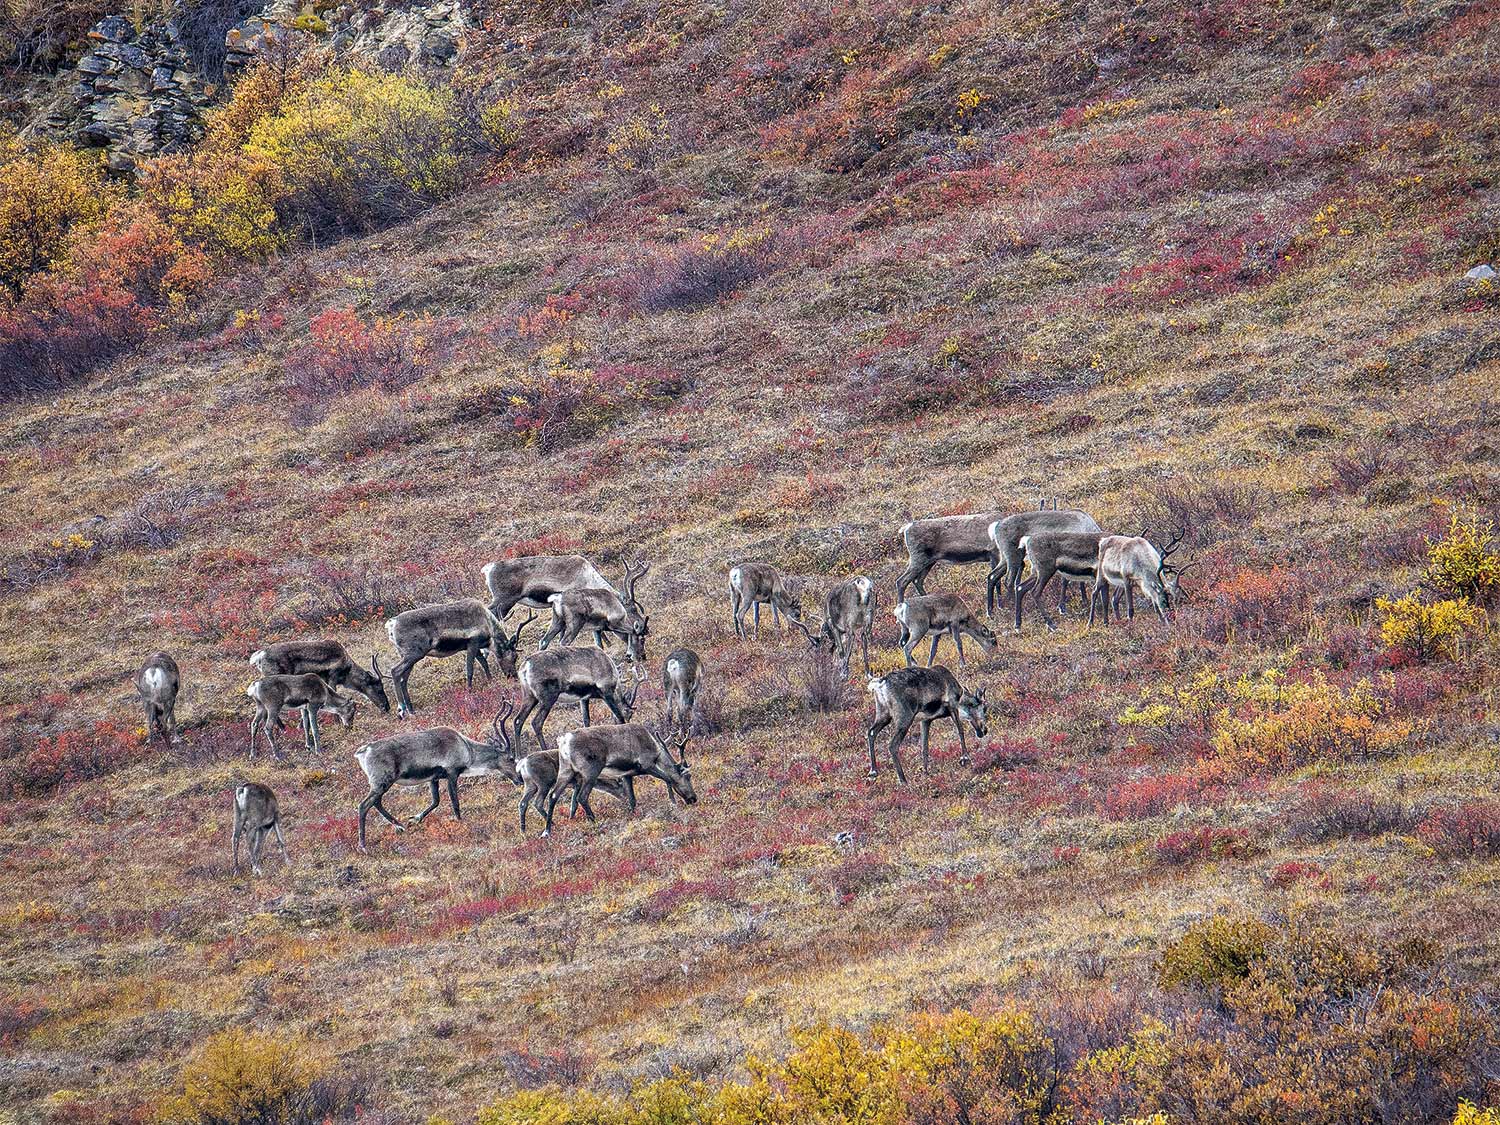 a herd of cows and calves feeding on an Alaskan hillside